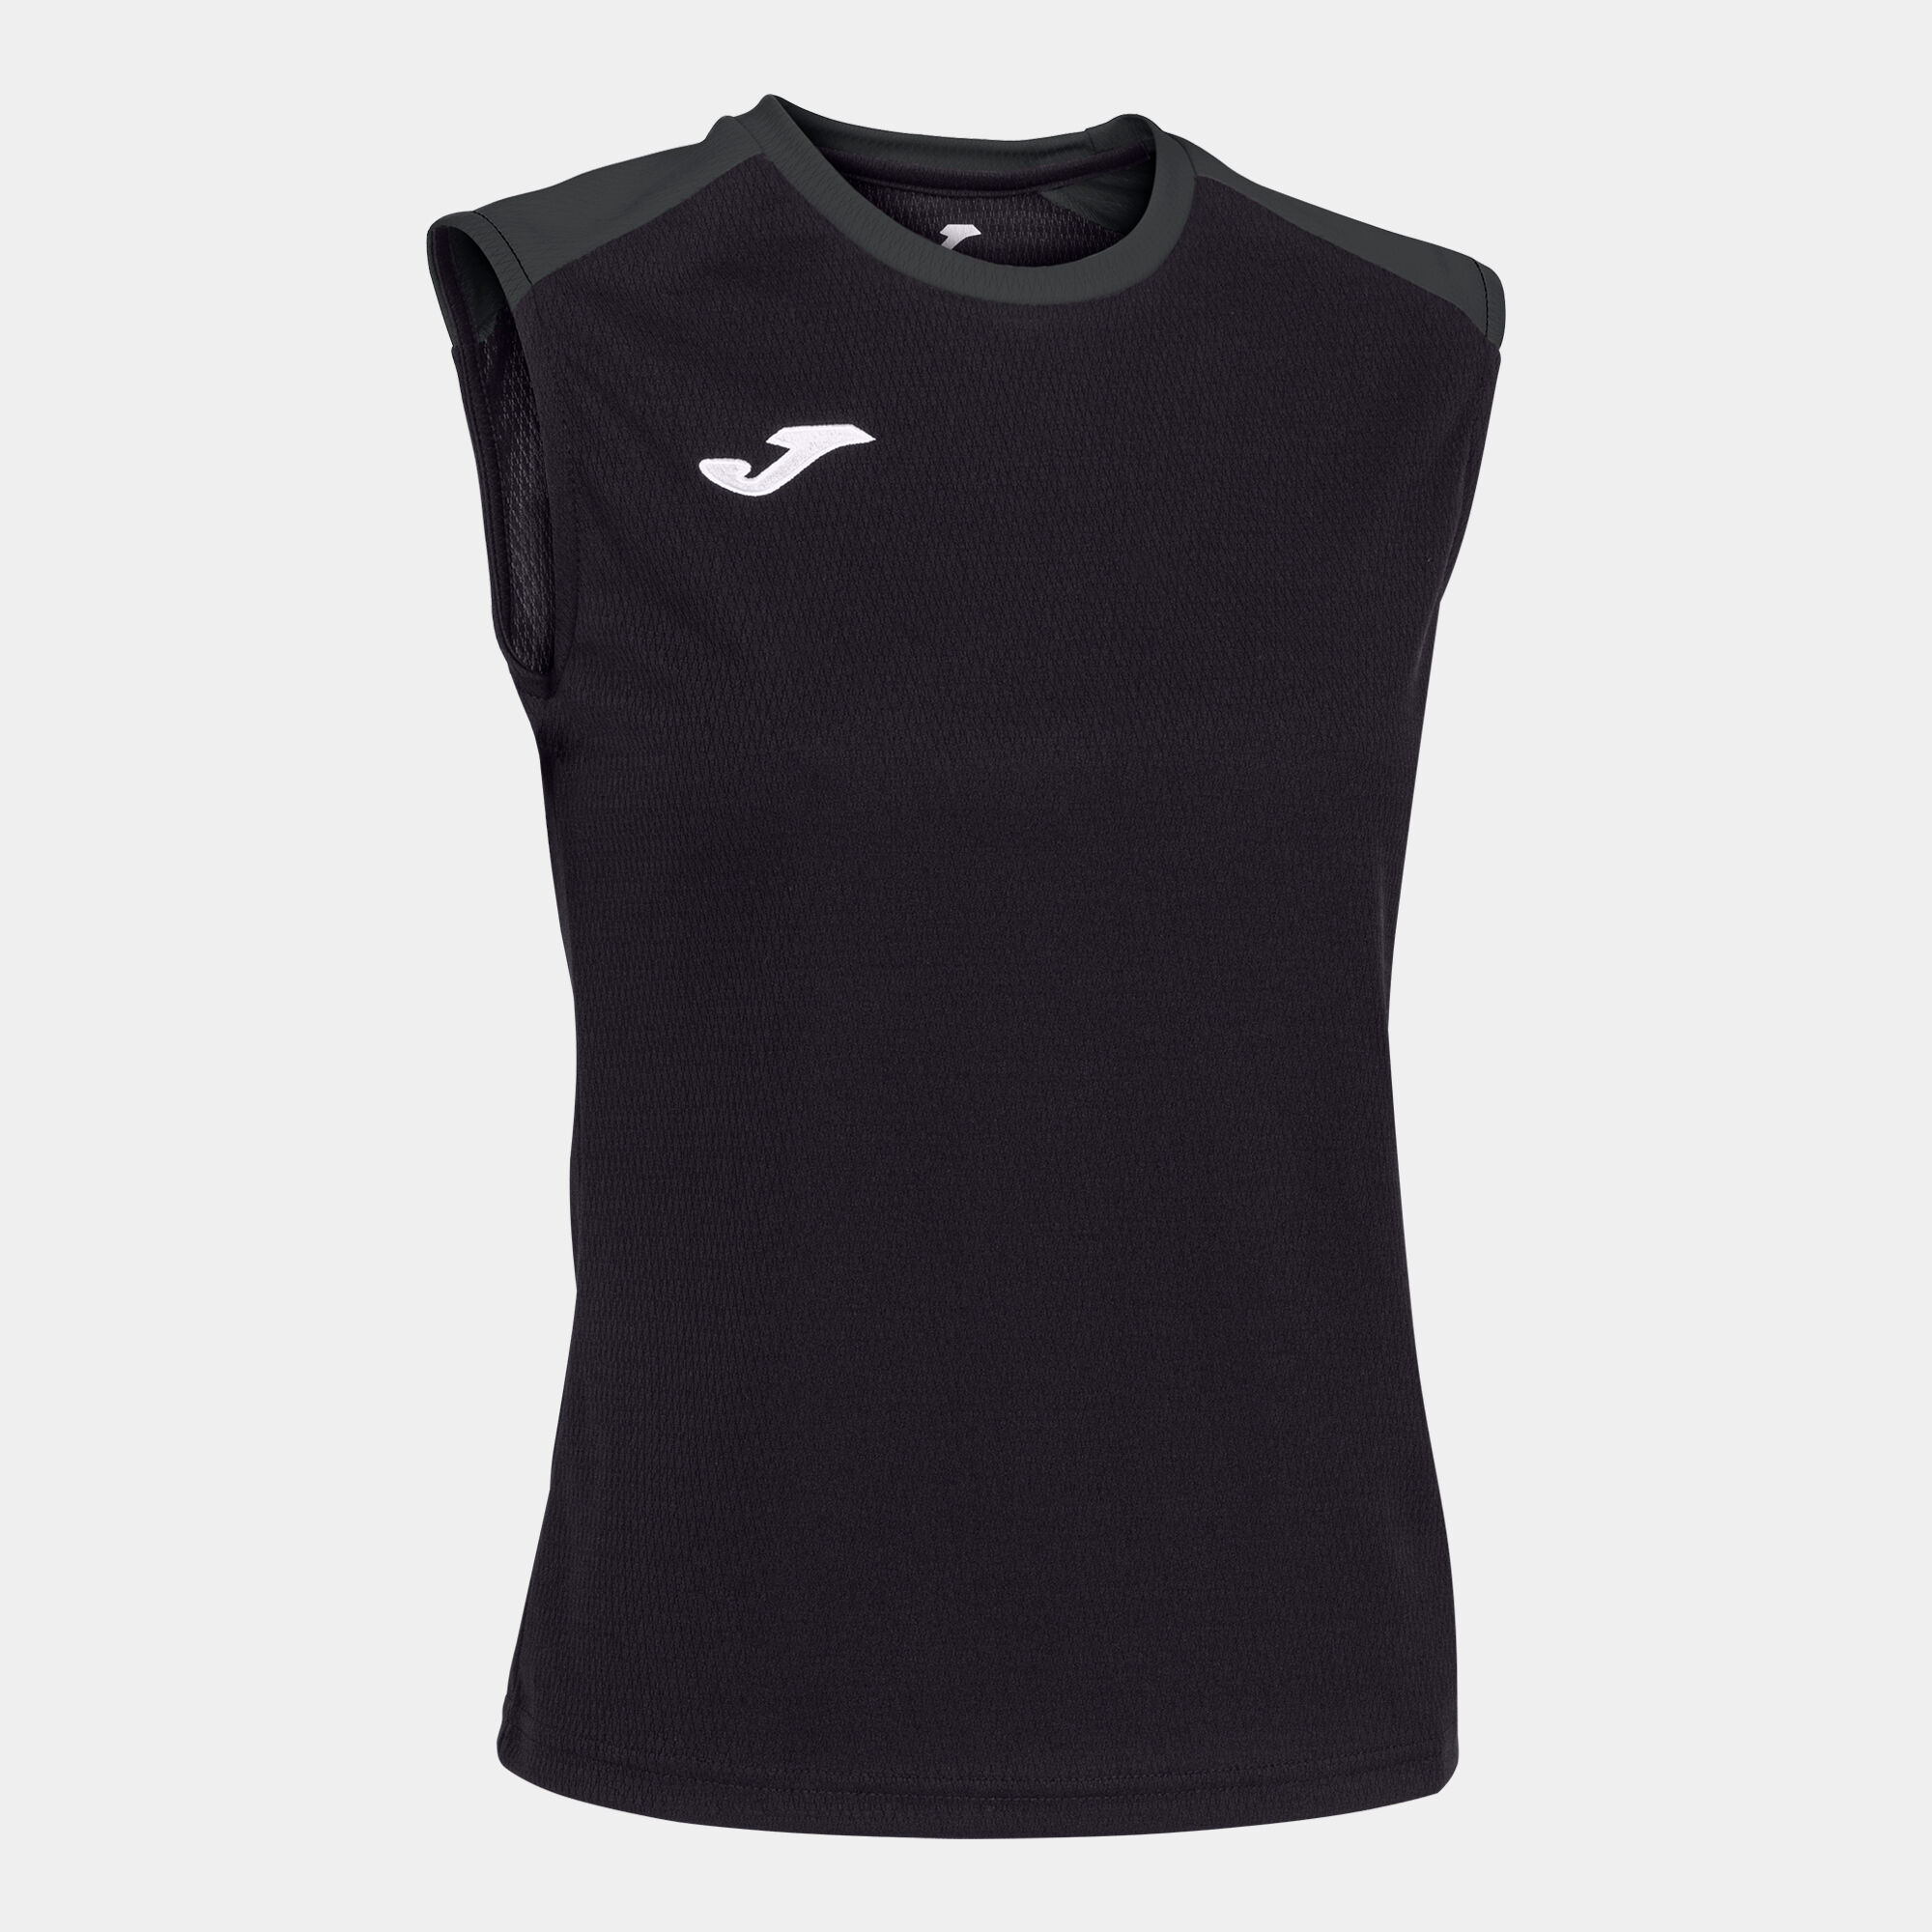 Camiseta tirantes mujer Eco Championship negro antracita